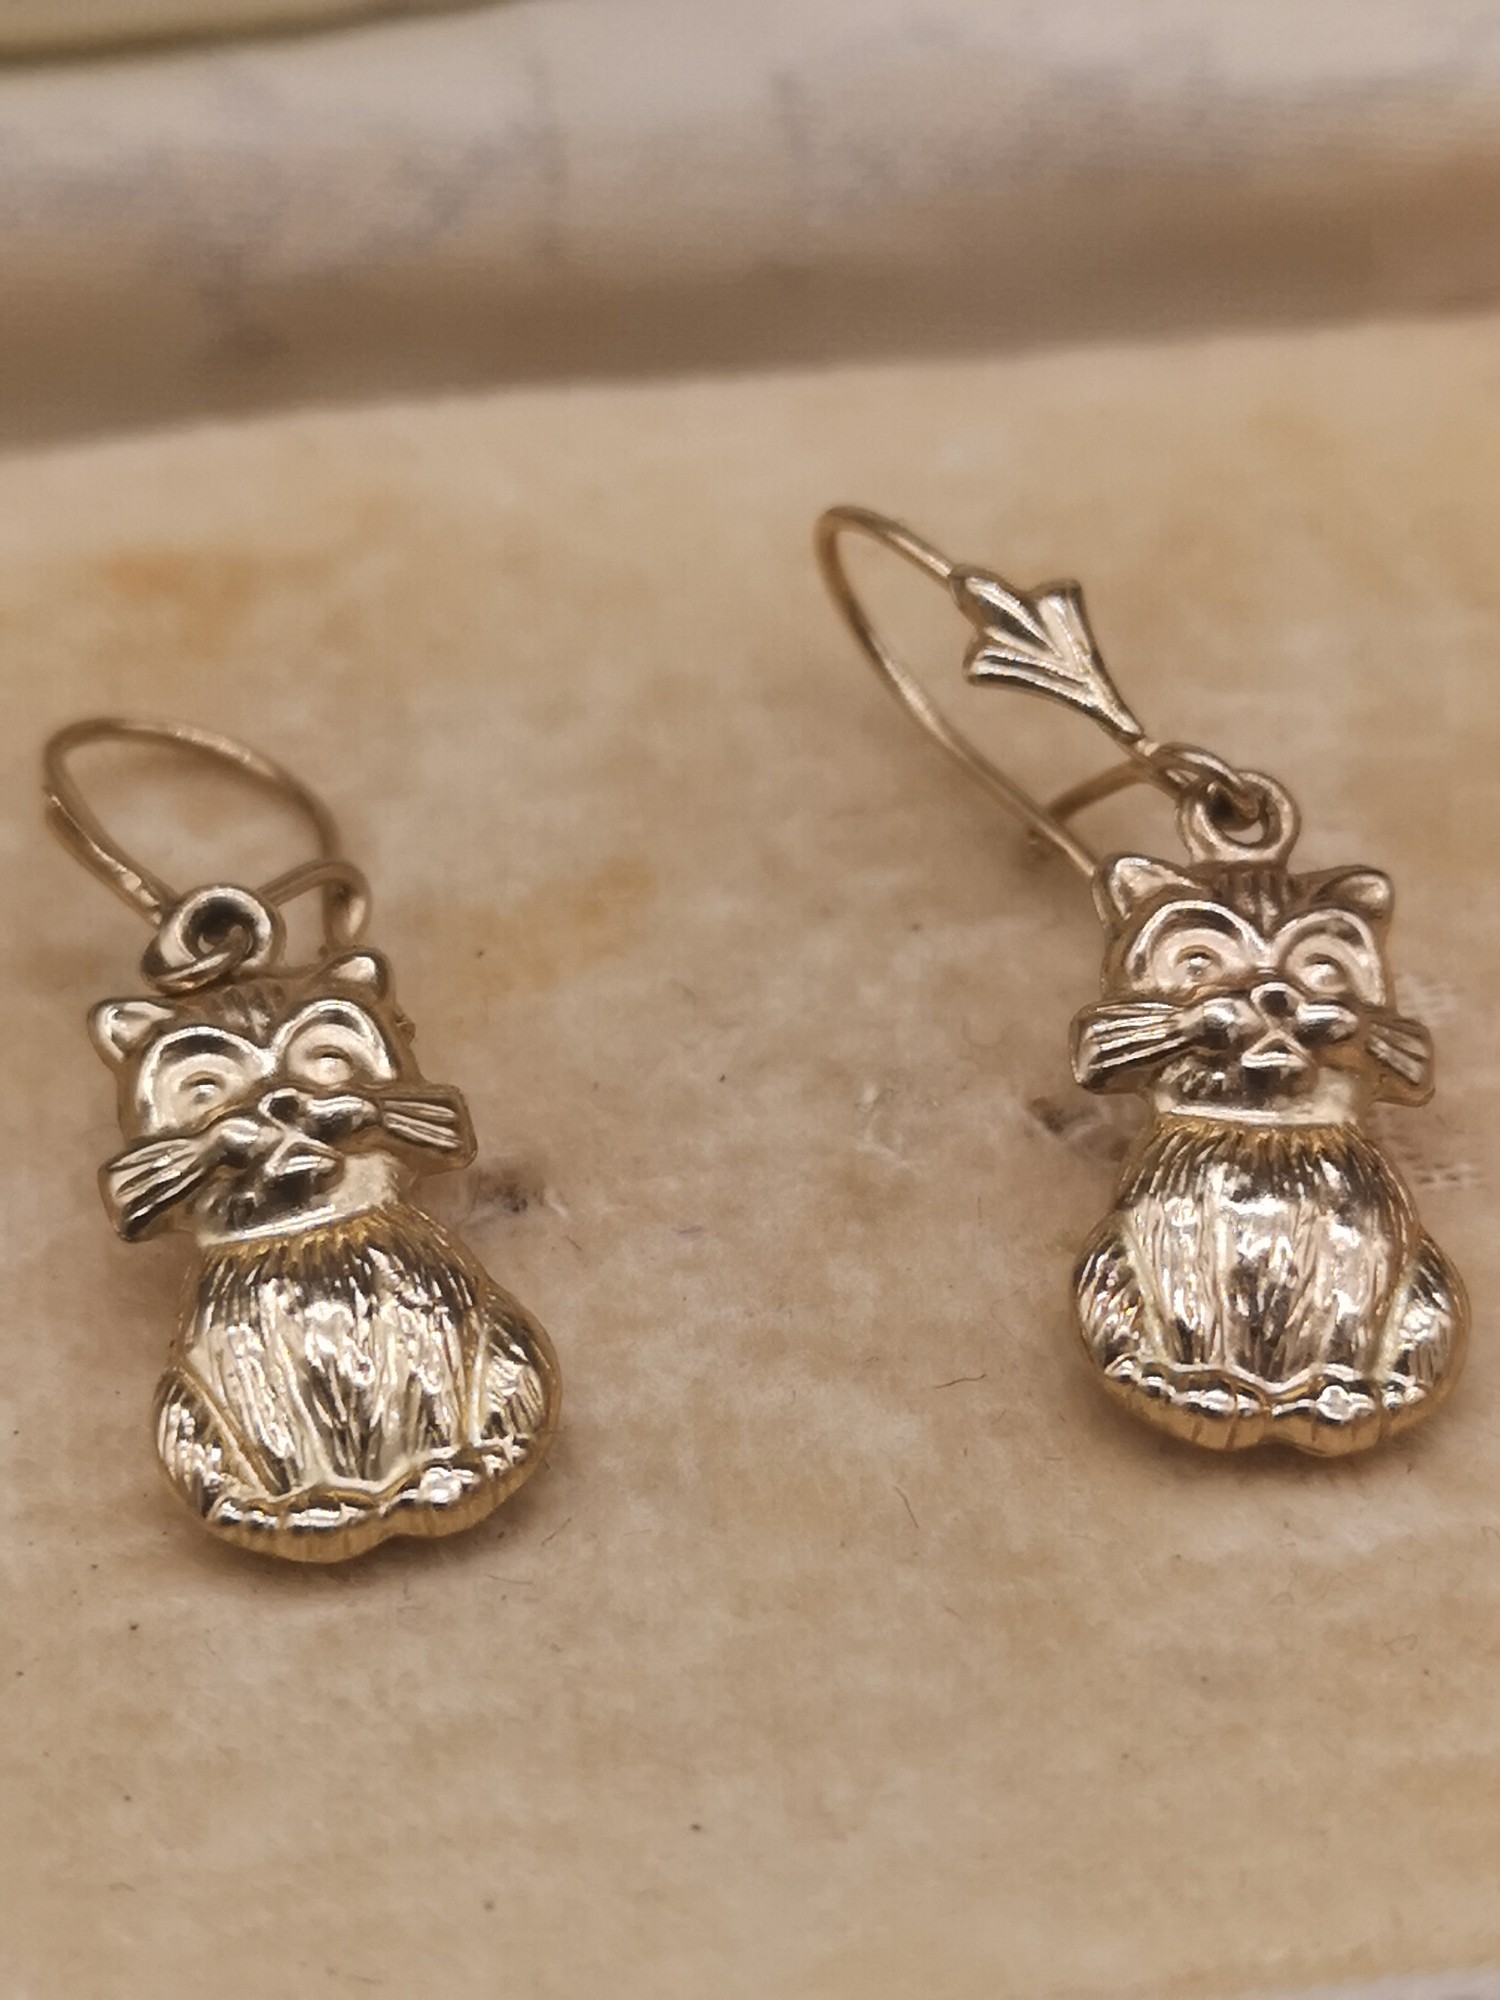 Pair of 9ct gold cat earrings.